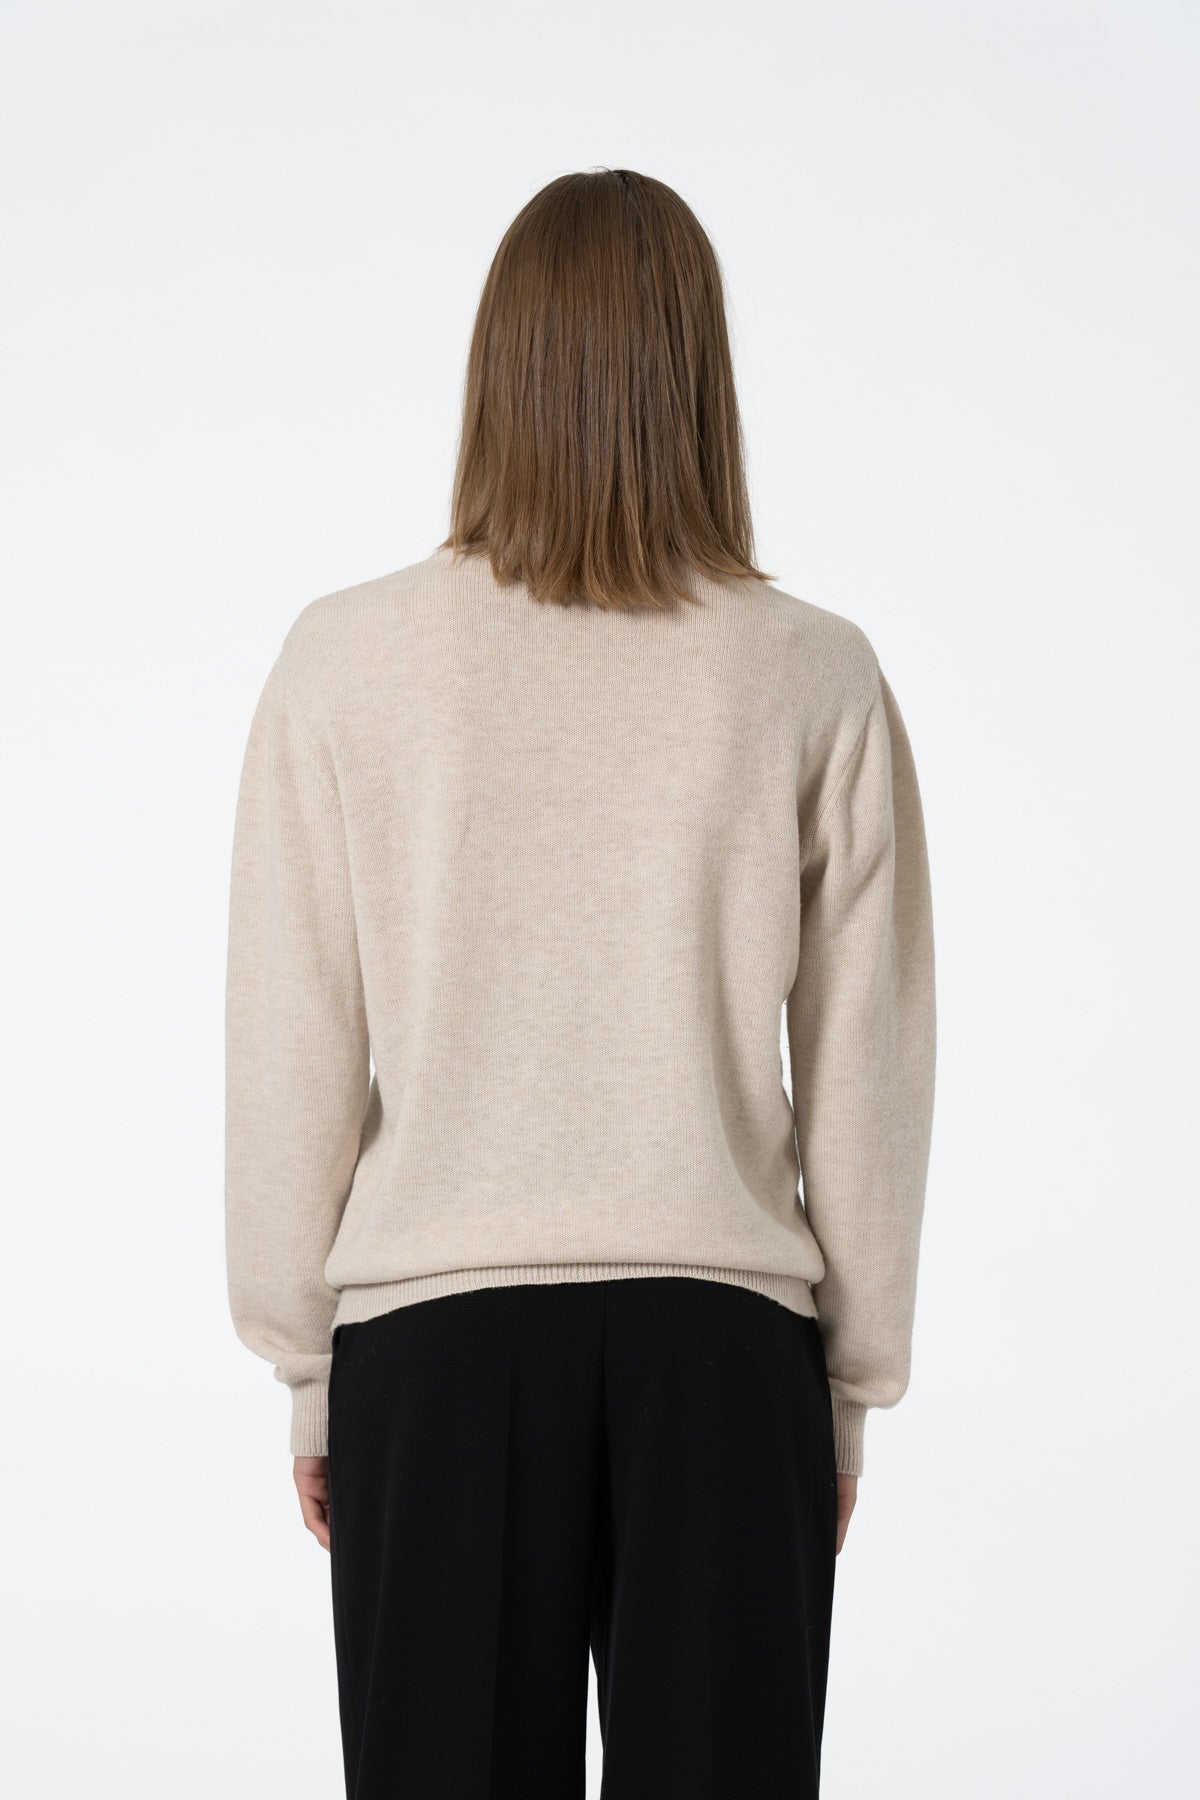 MERINO Unisex Sweater - Almond White